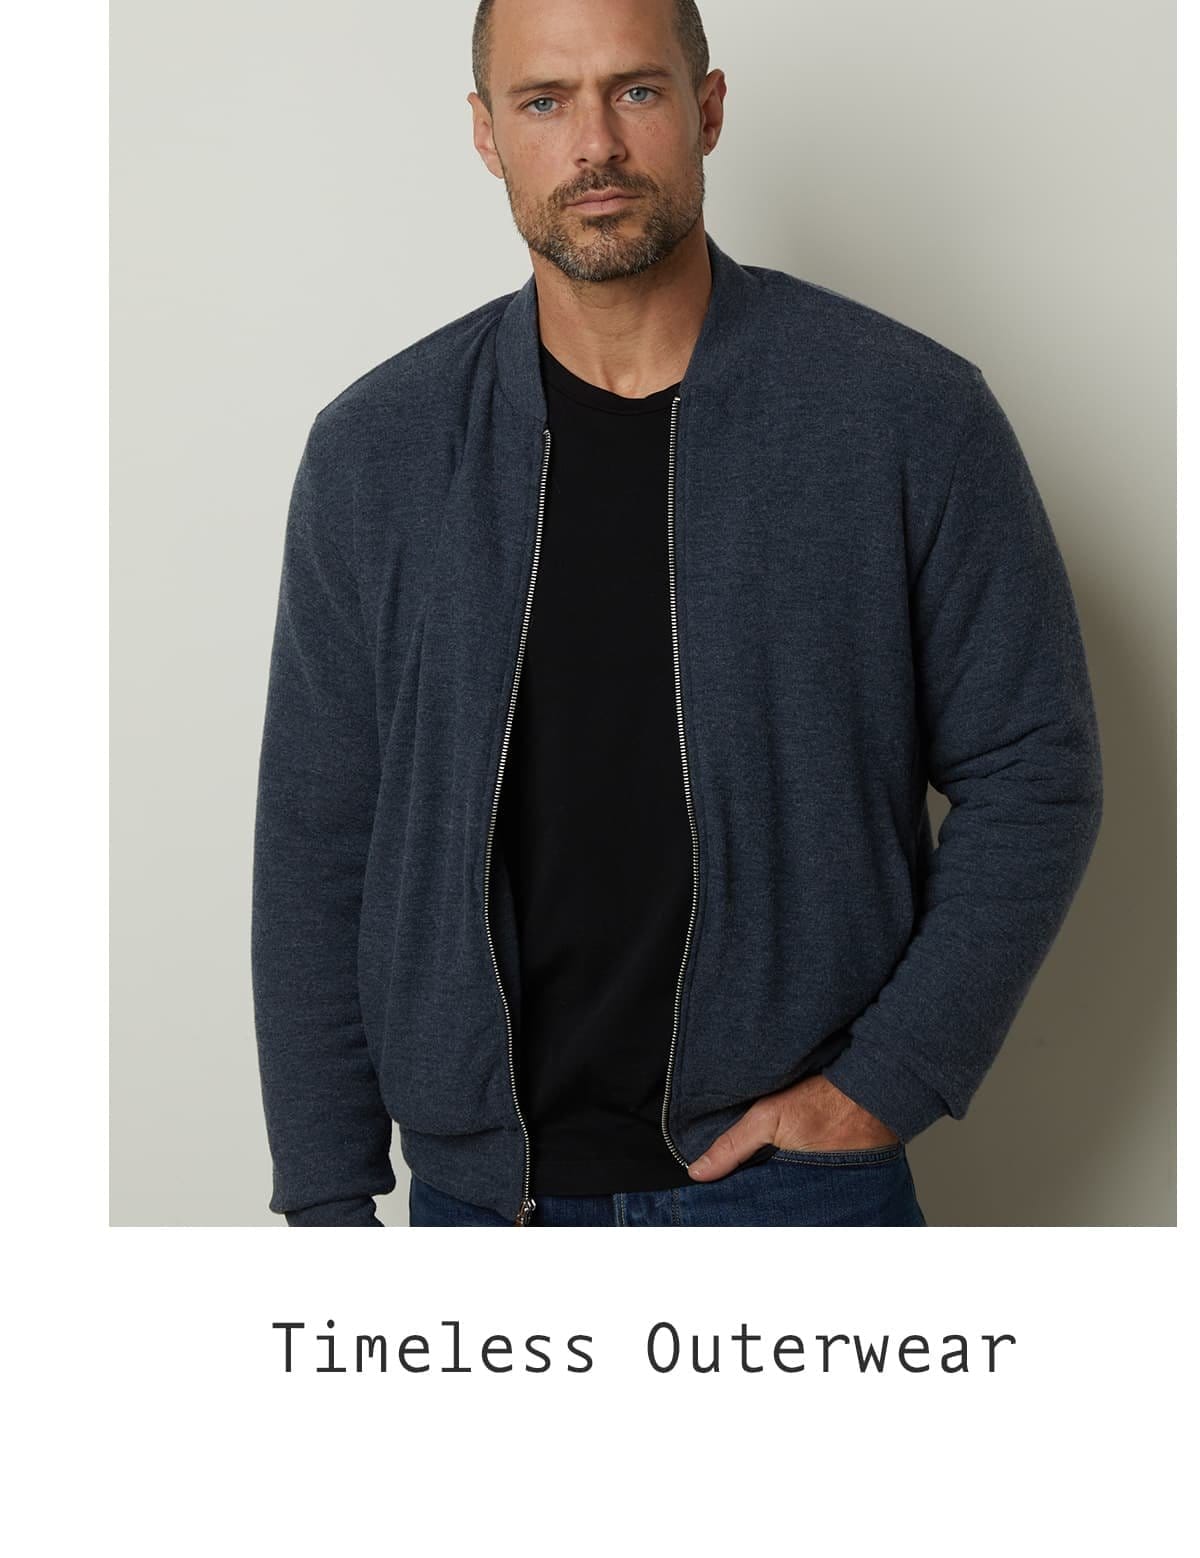 Timeless Outerwear